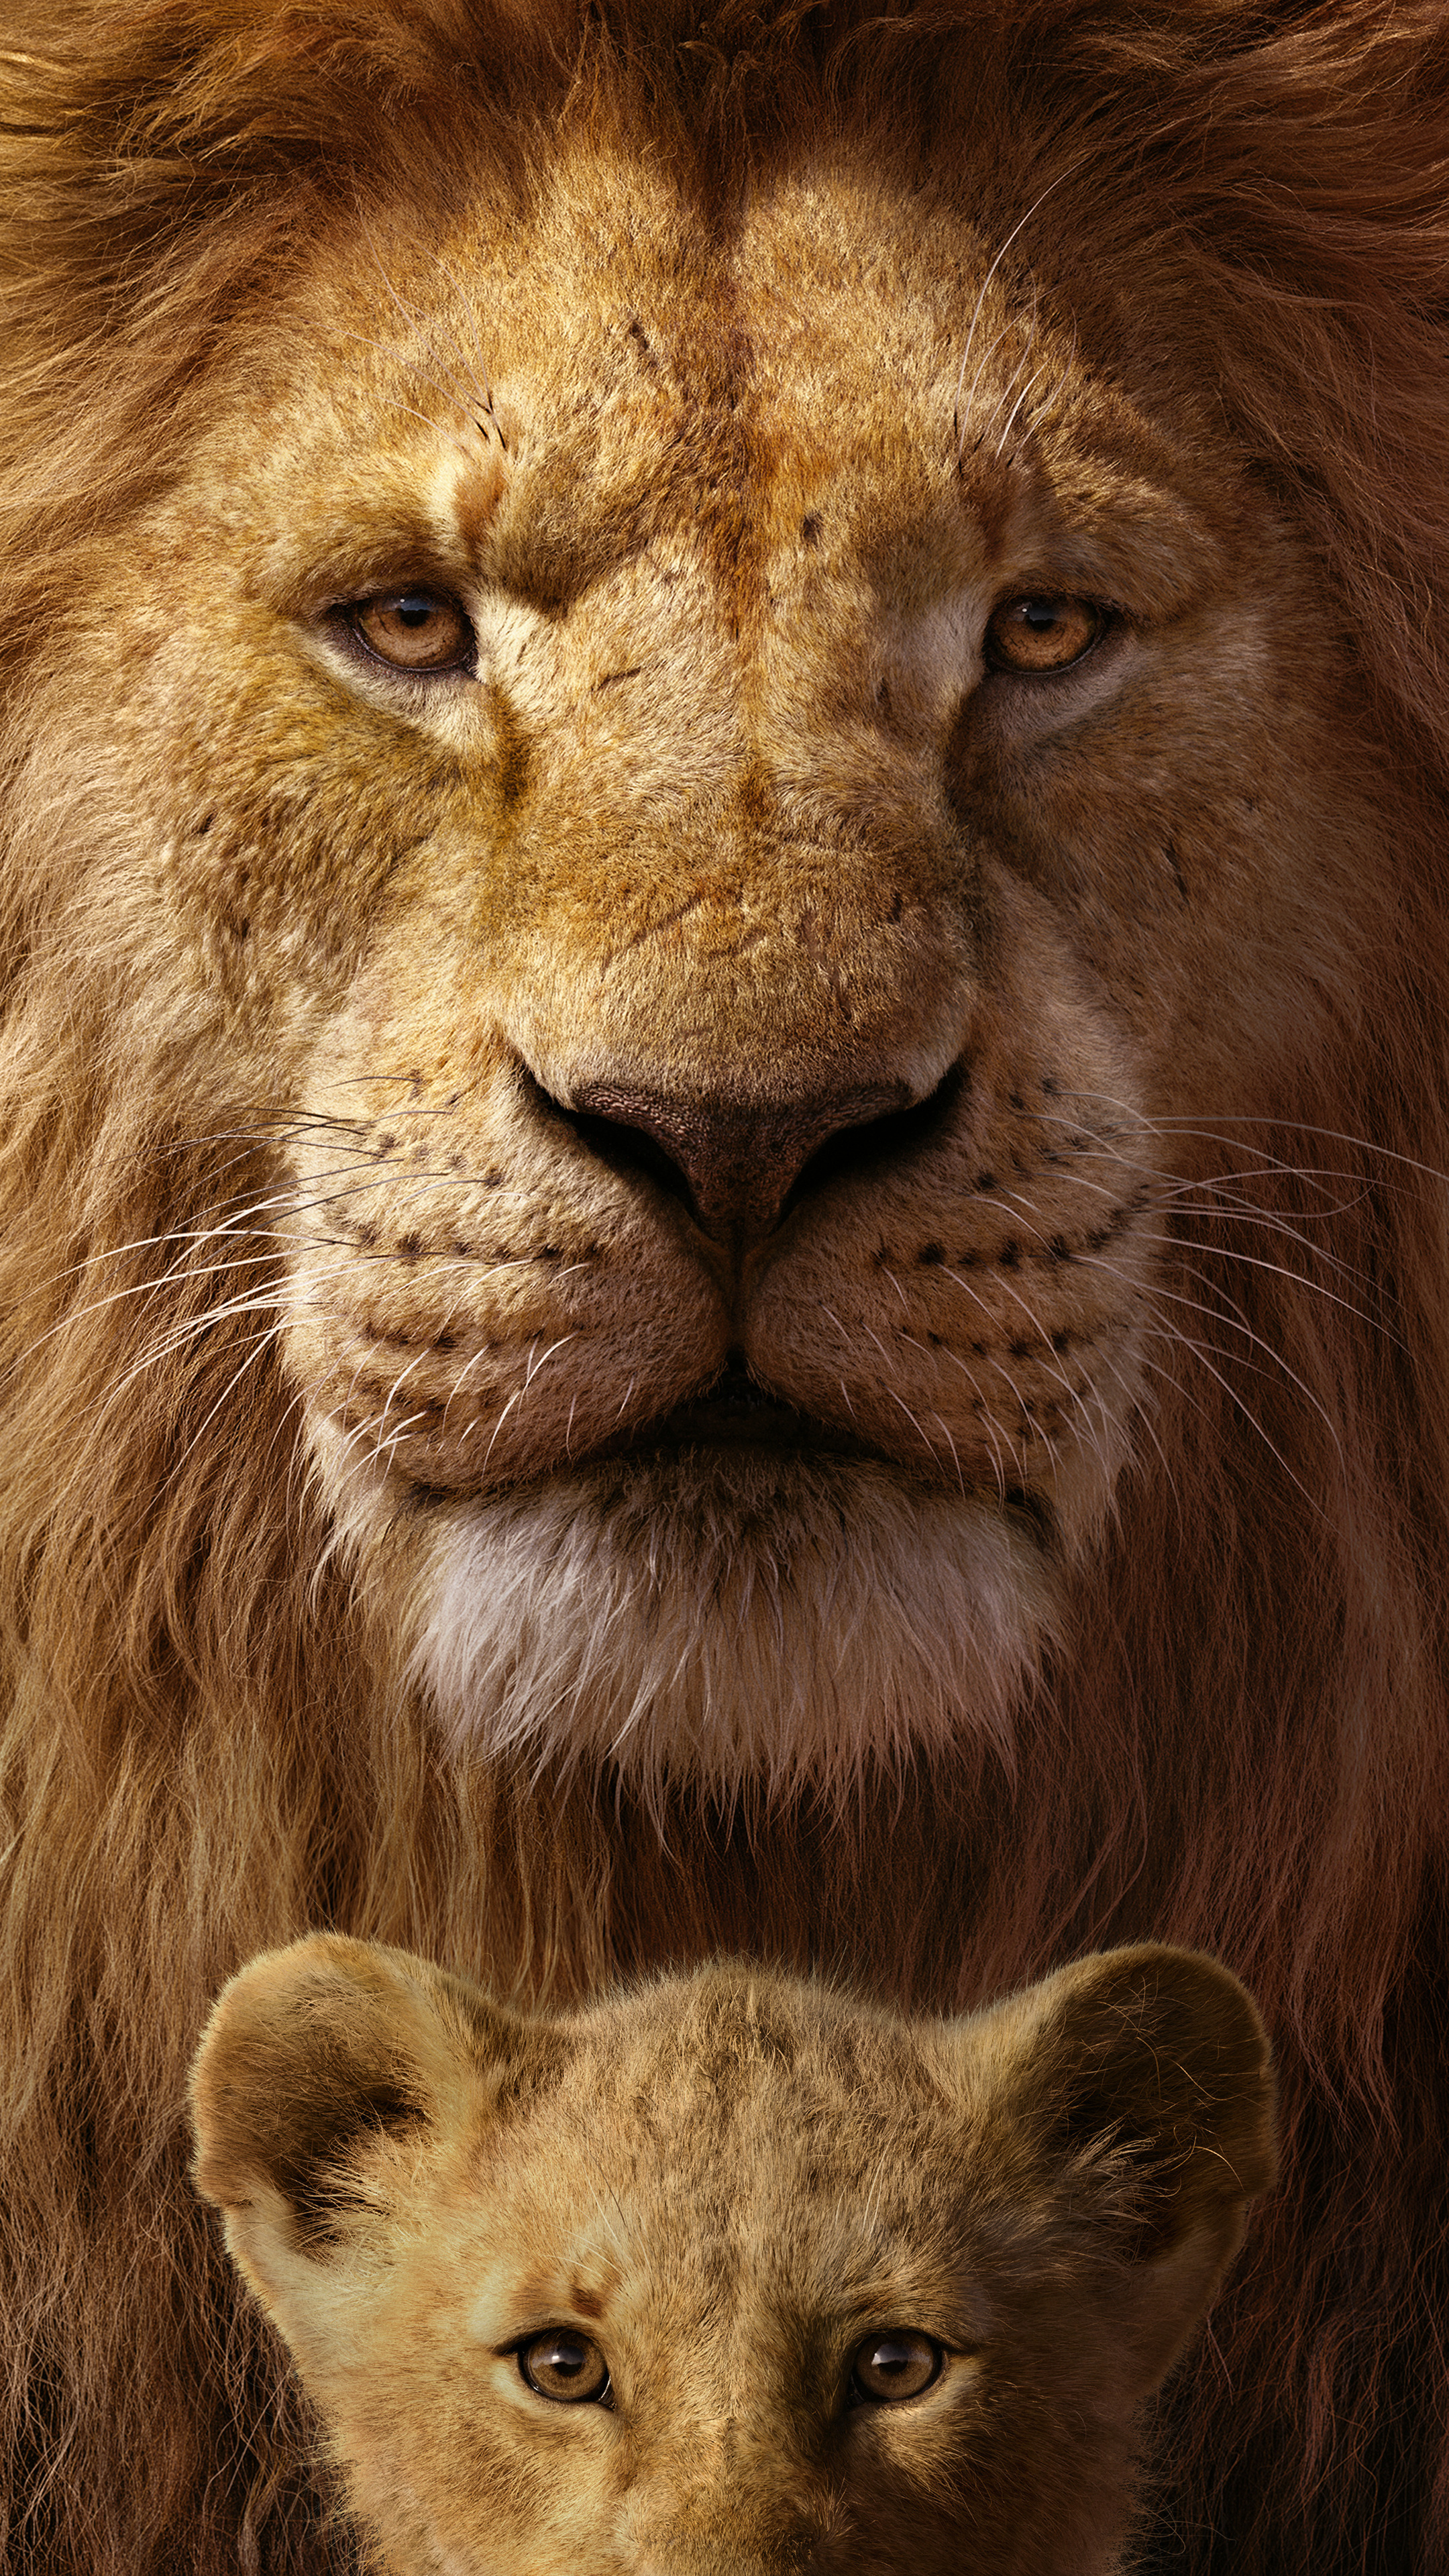 The Lion King, Breathtaking 8K quality, Sony Xperia X, Majestic visuals, 2160x3840 4K Handy